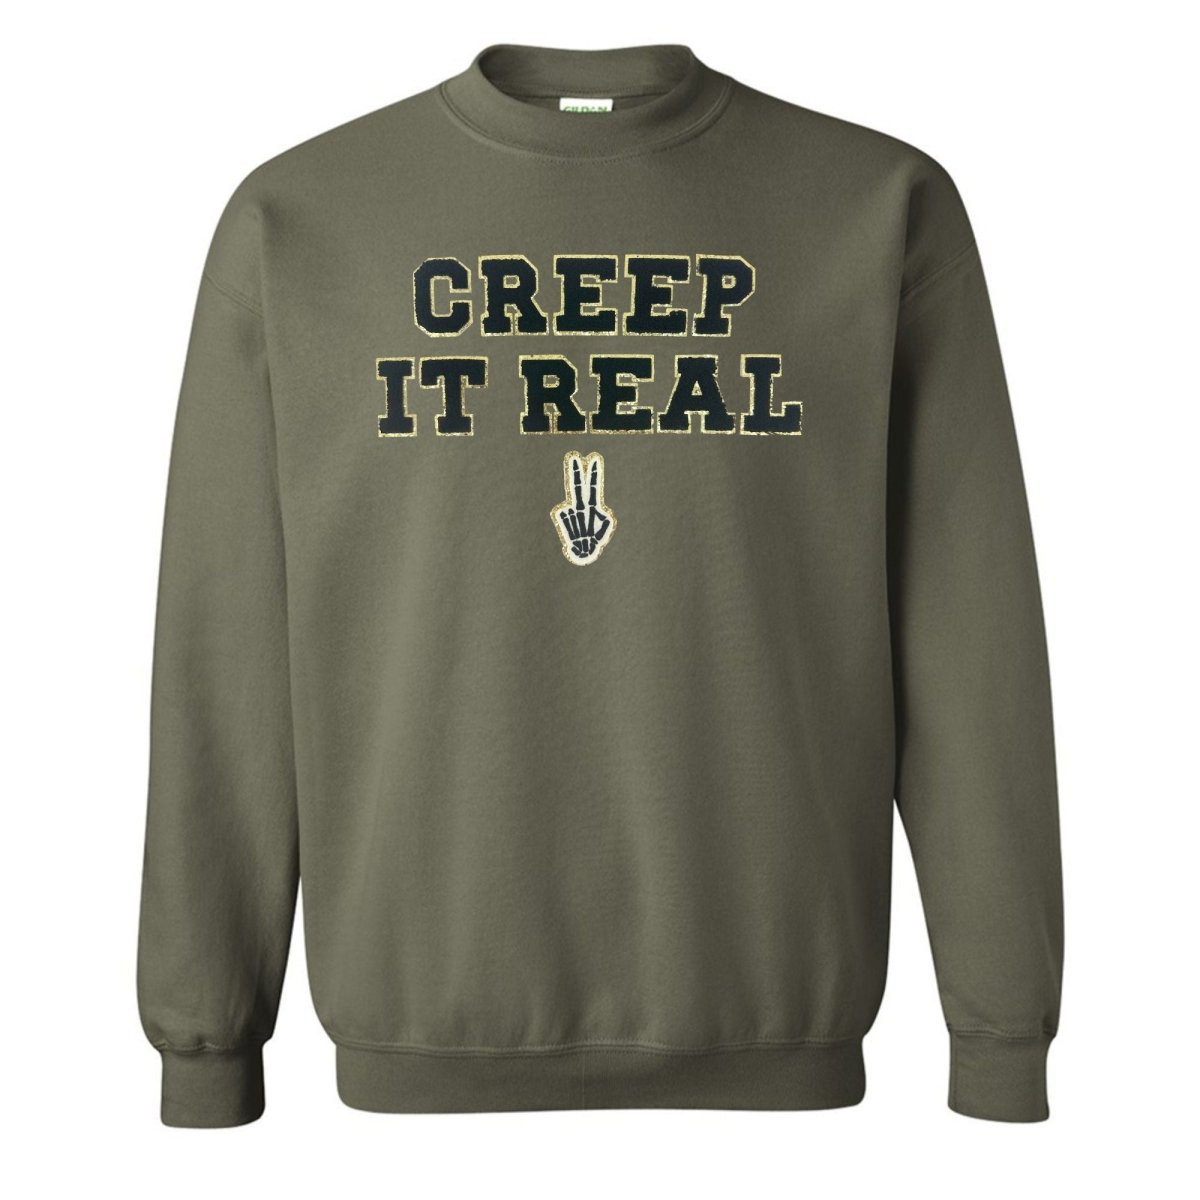 'Creep It Real' Letter Patch Crewneck Sweatshirt - United Monograms